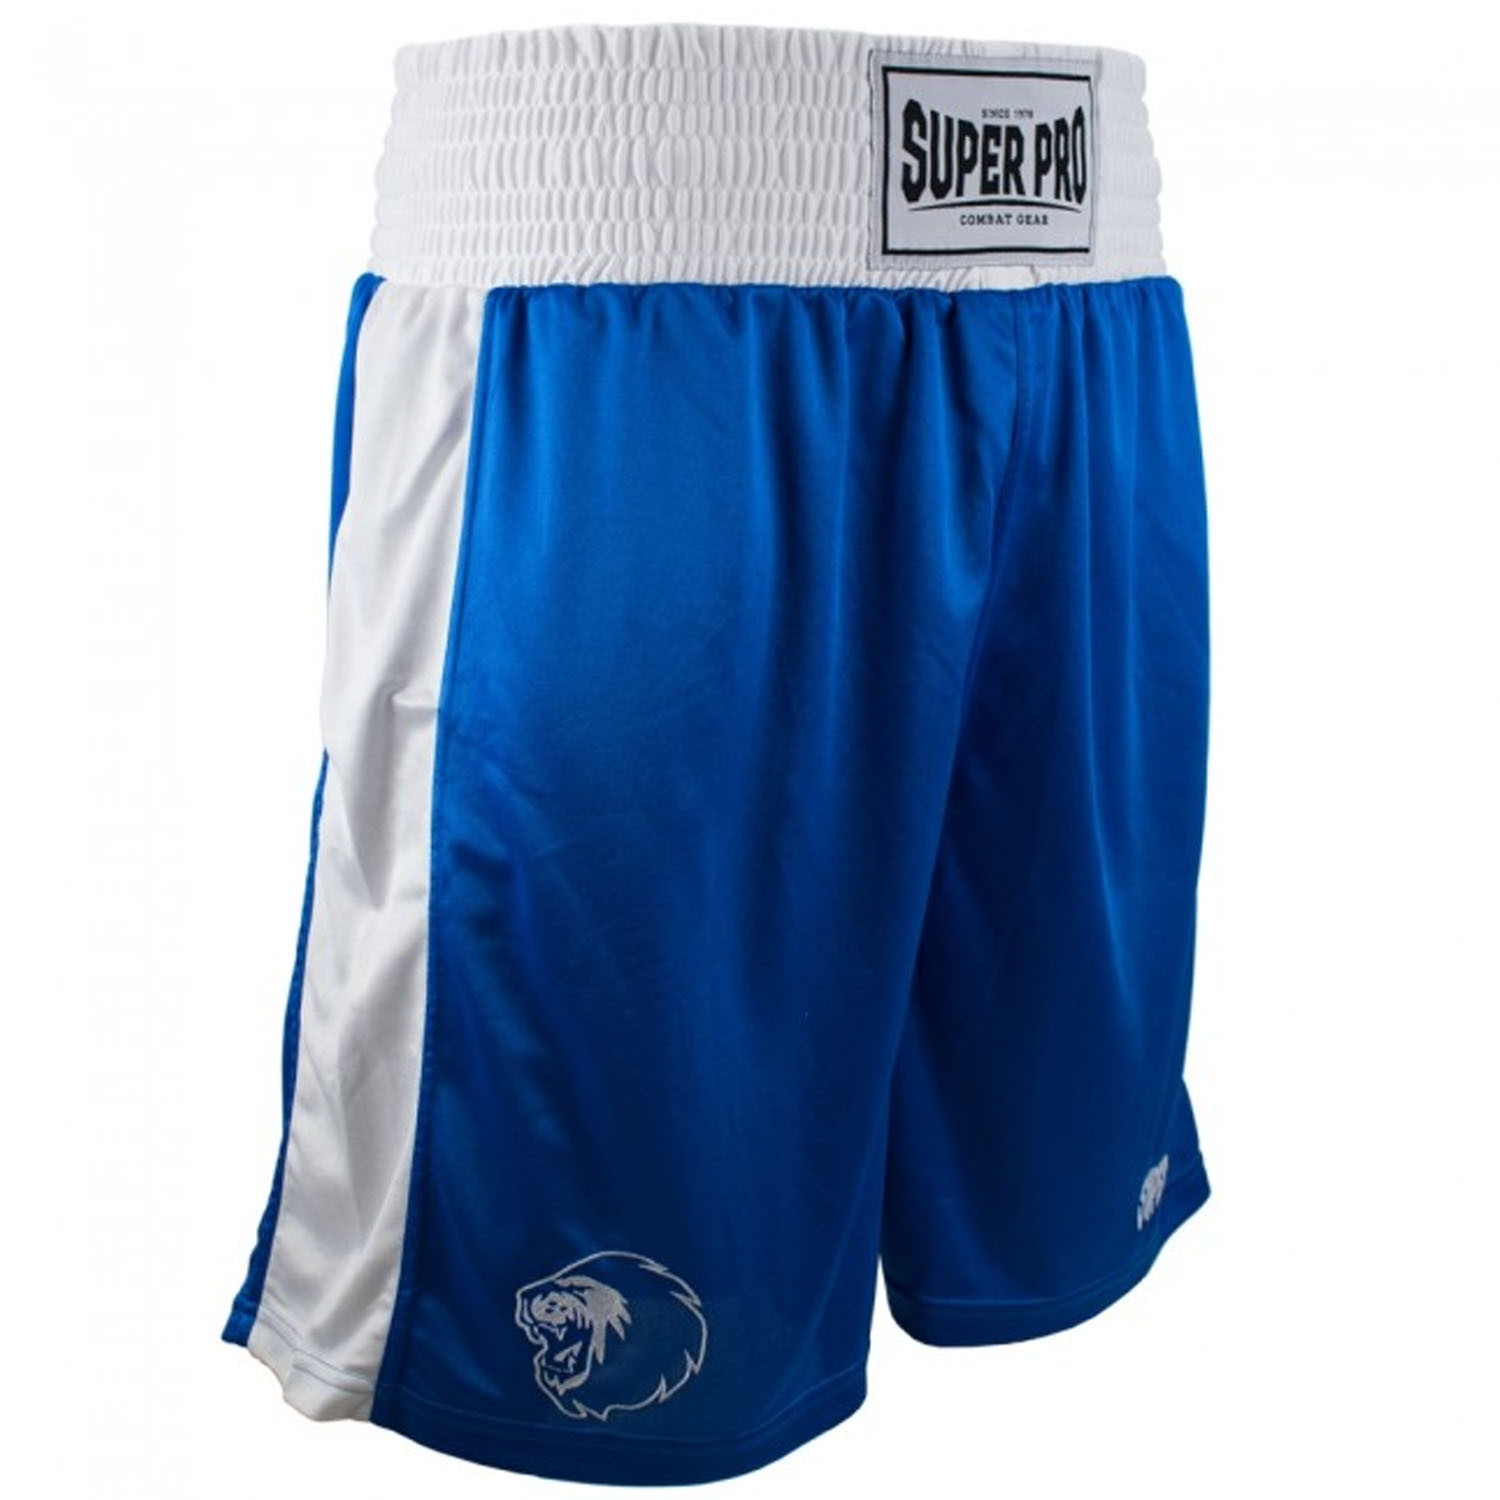 Super Pro Boxhose, Club, blau- weiß